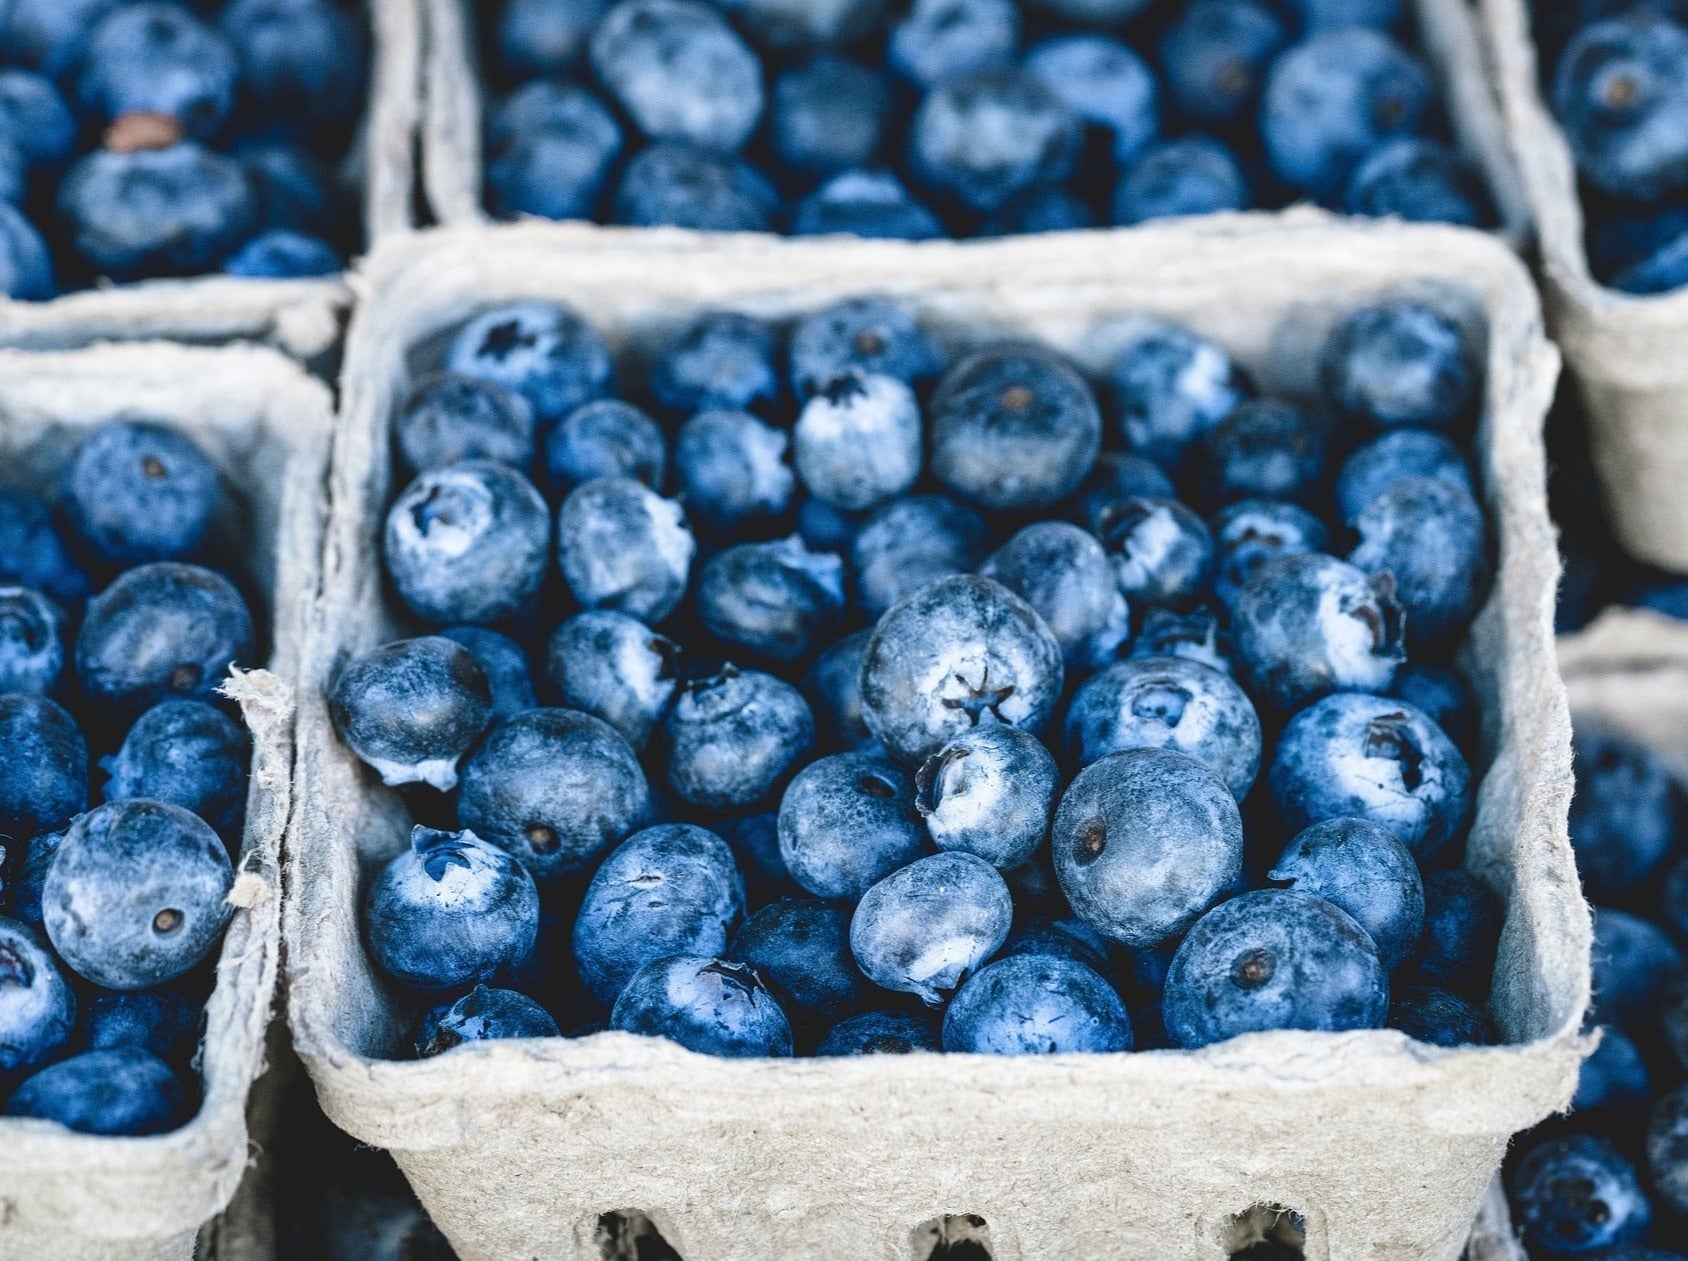 NZ Organic Blueberries